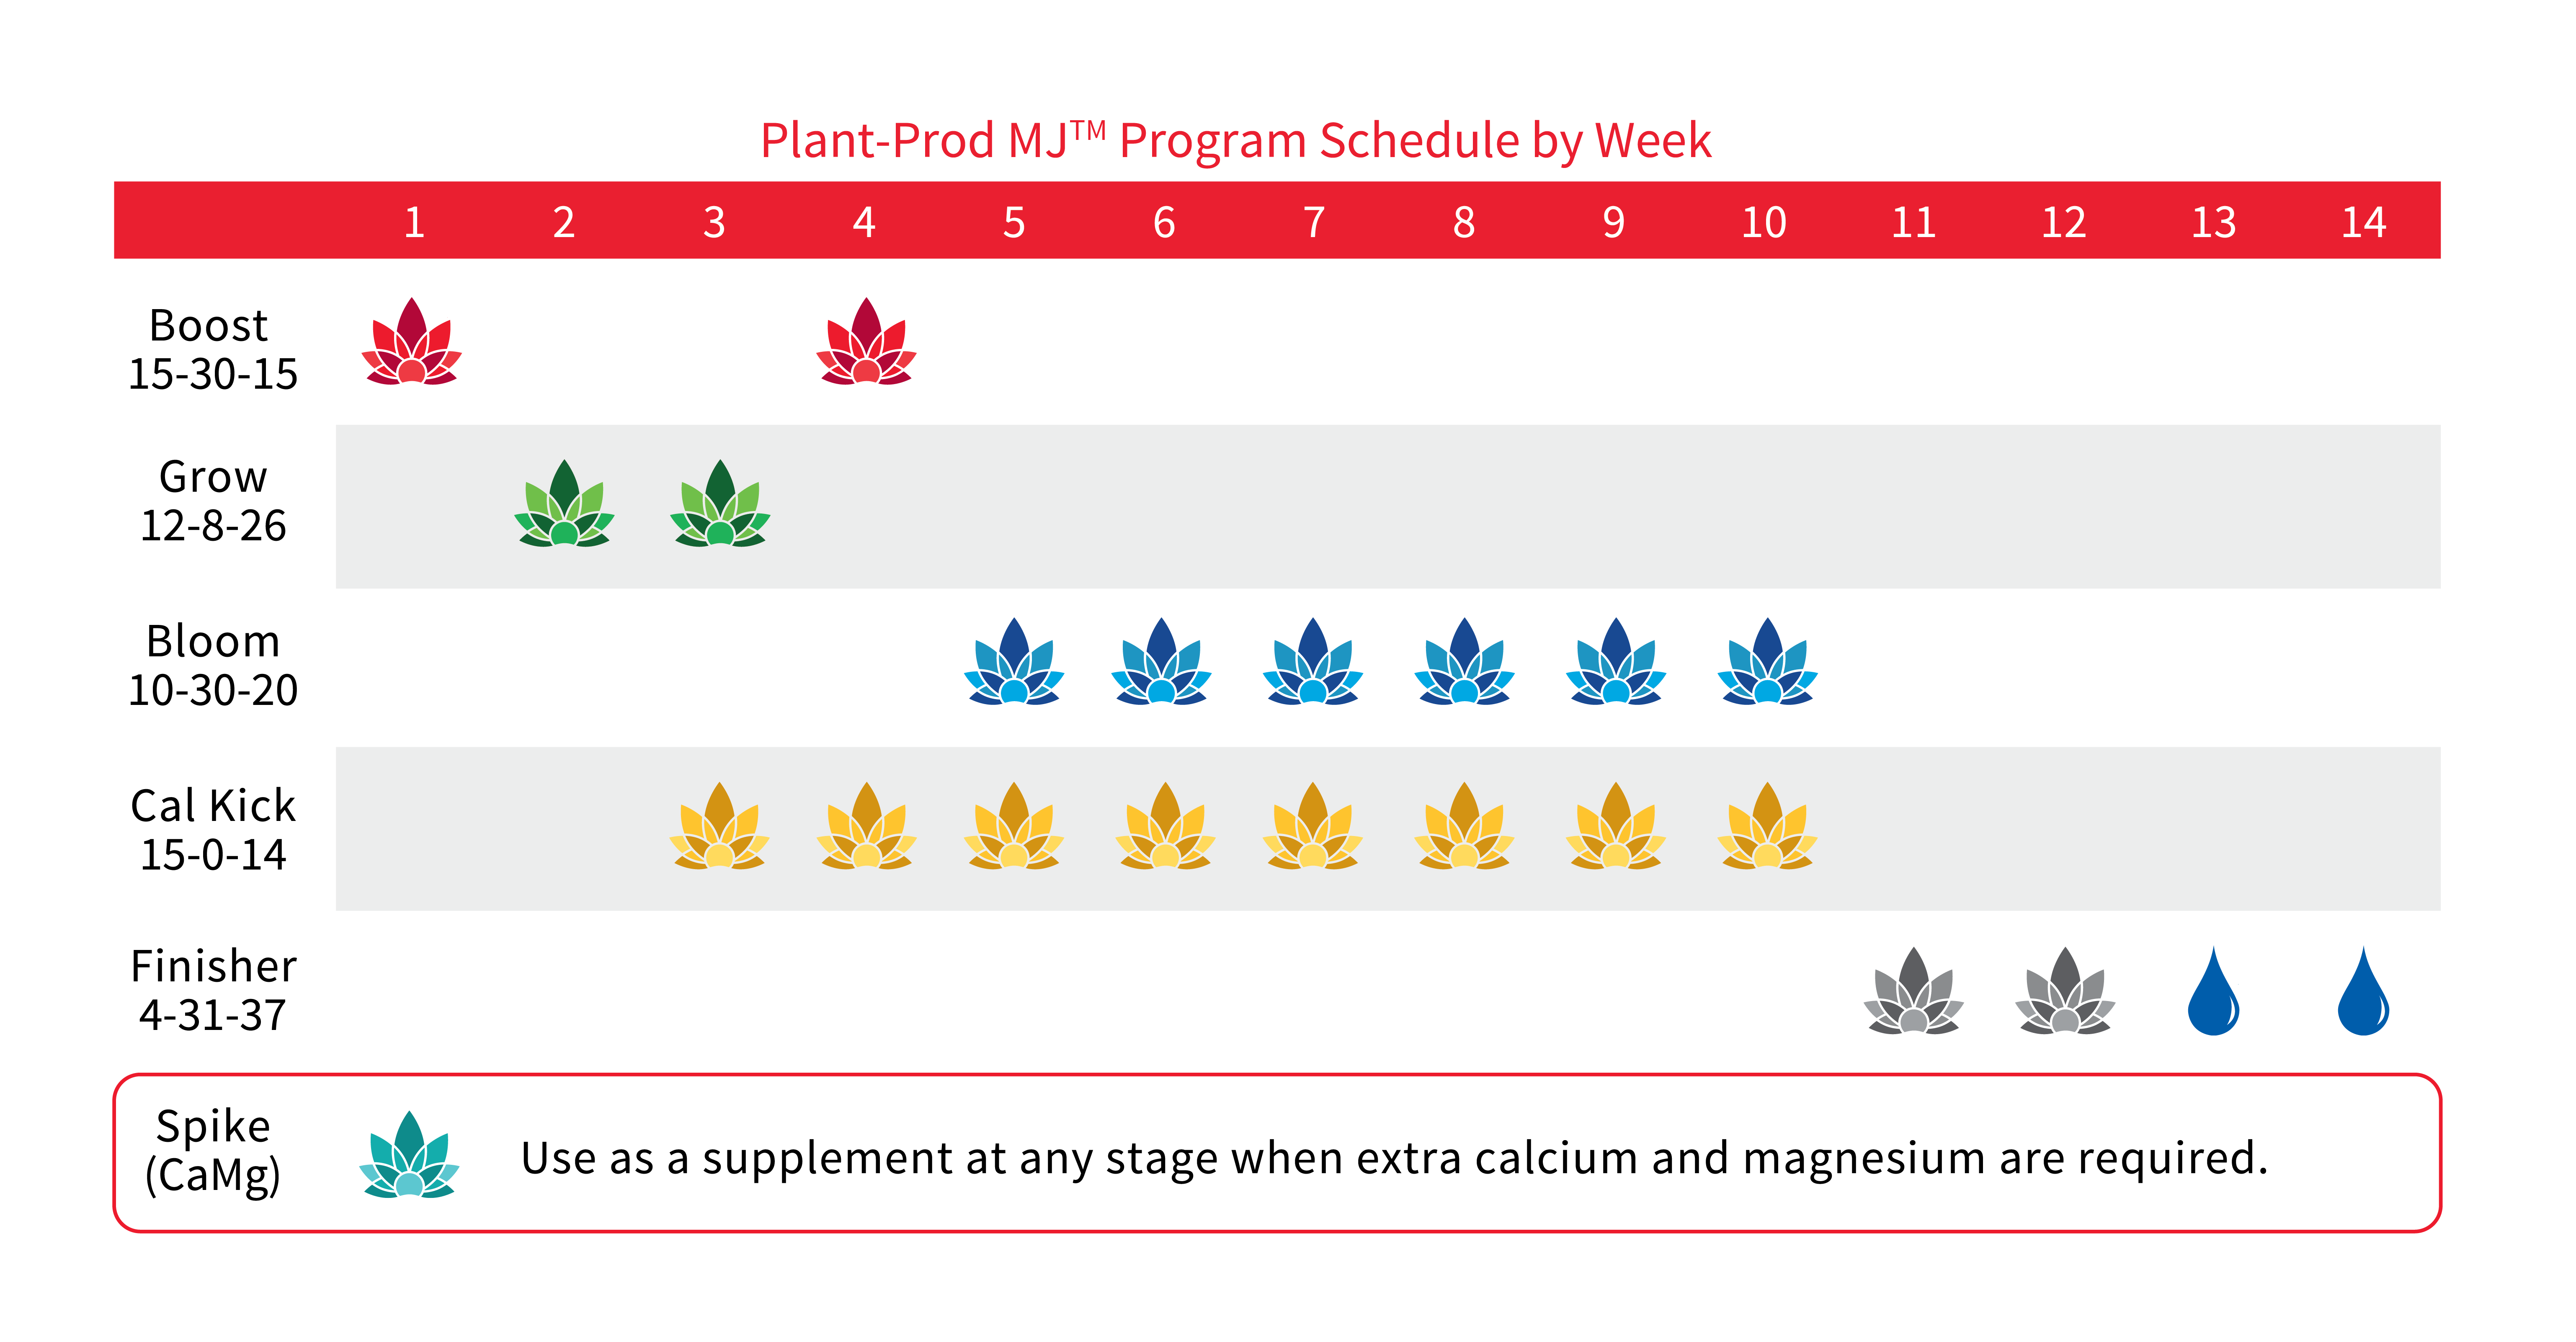 PP MJ Production Schedule